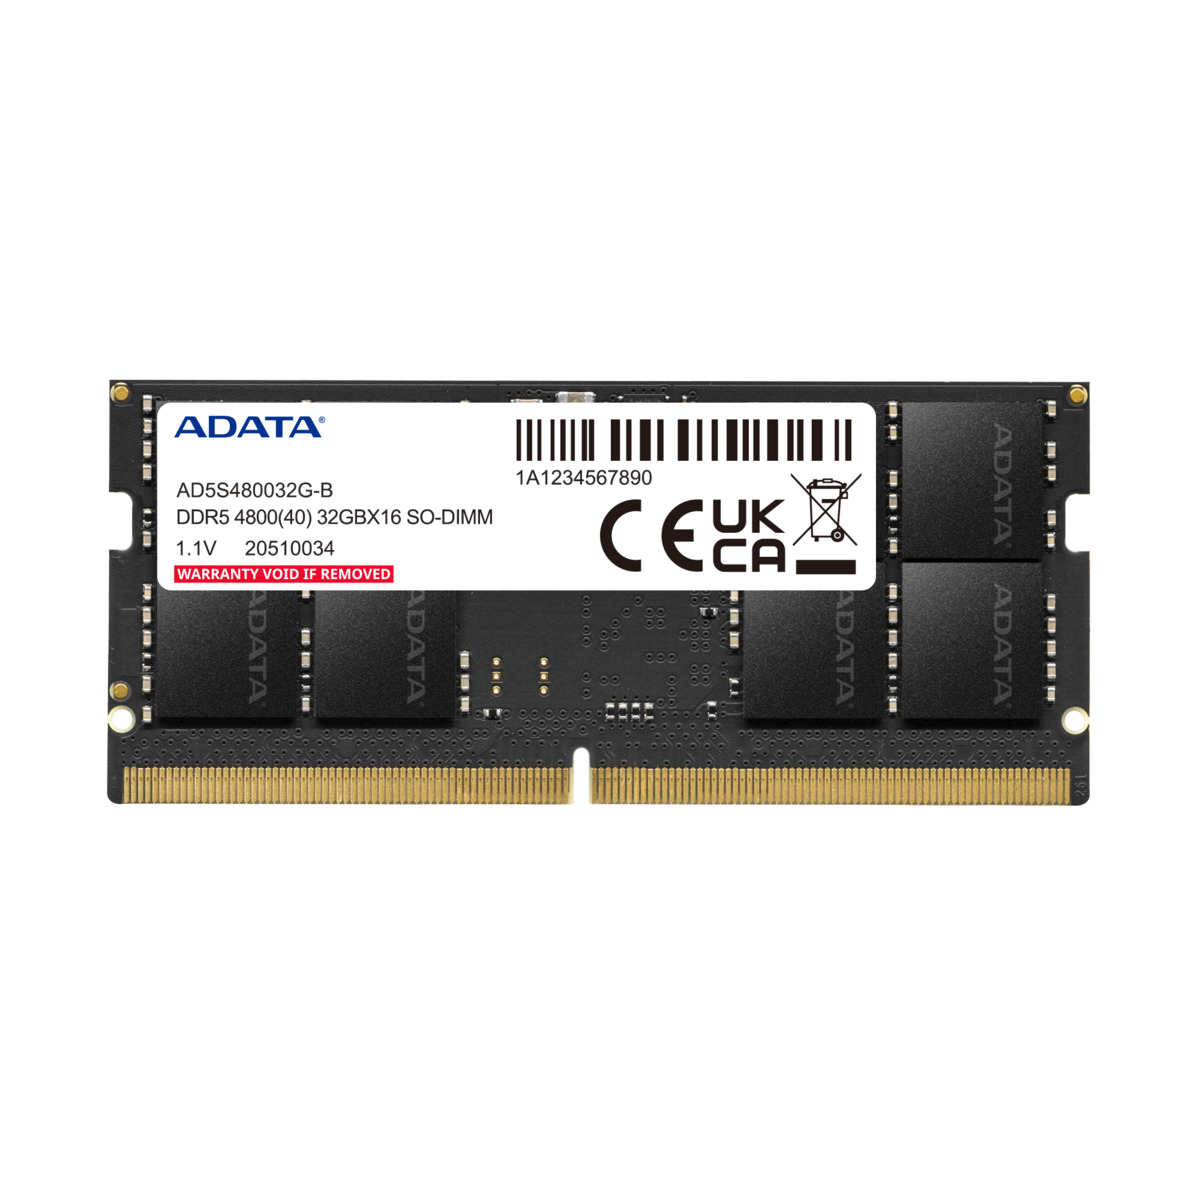 MEMORIA RAM DDR5 ADATA 4800HZ 8GB SODIMM CL40 1.1V (AD5S48008G-S)